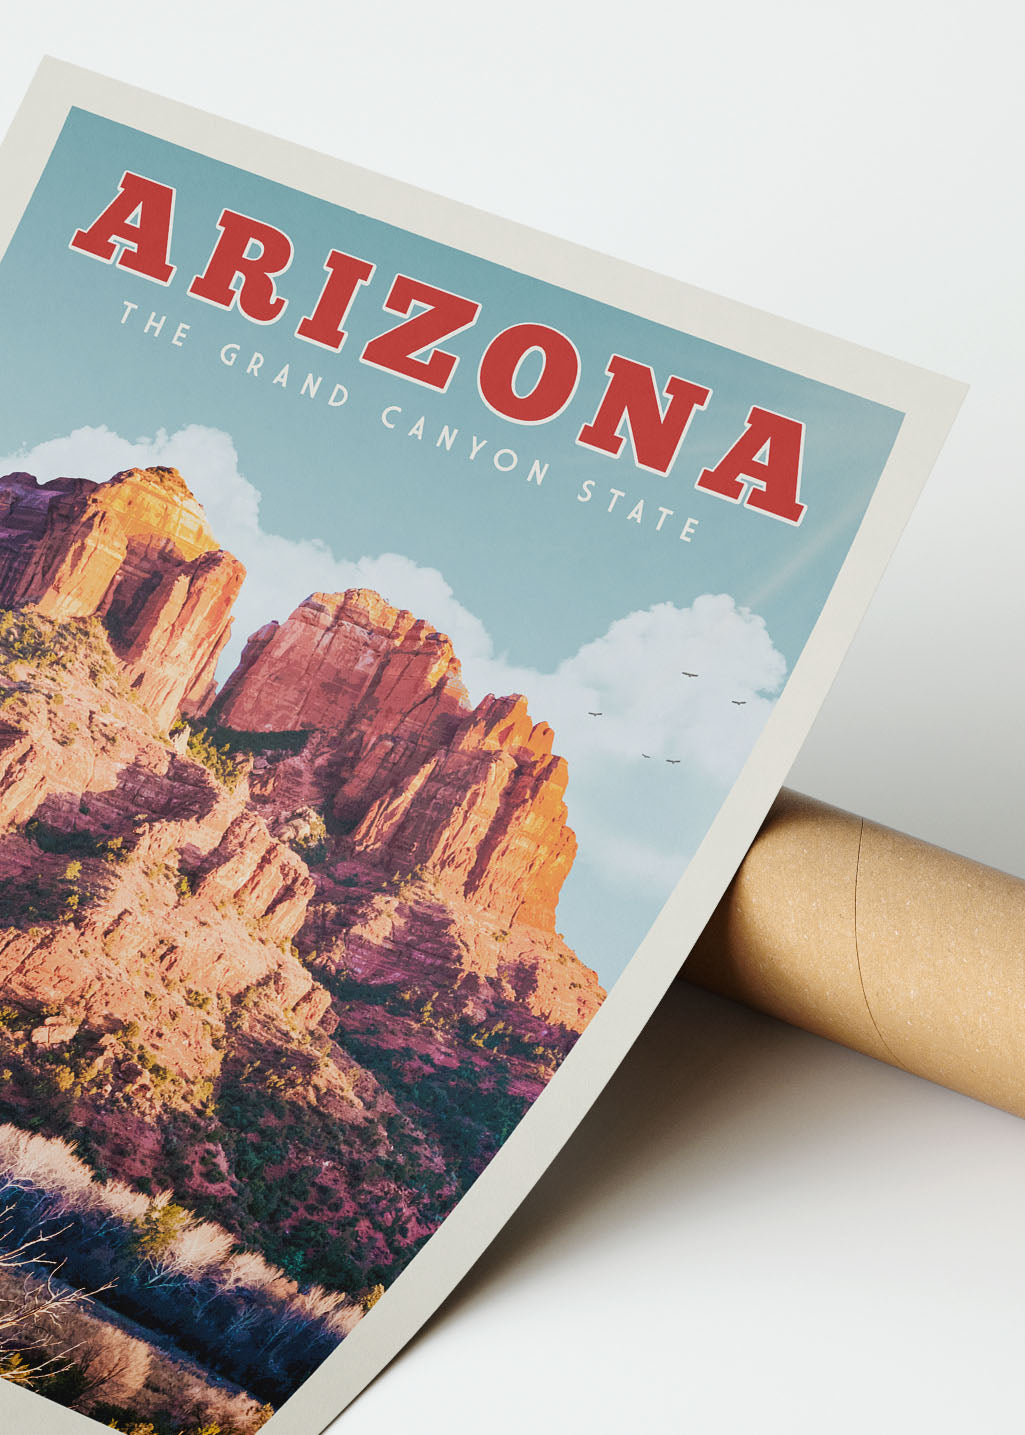 Arizona - Vintage Travel Print - Vintaprints